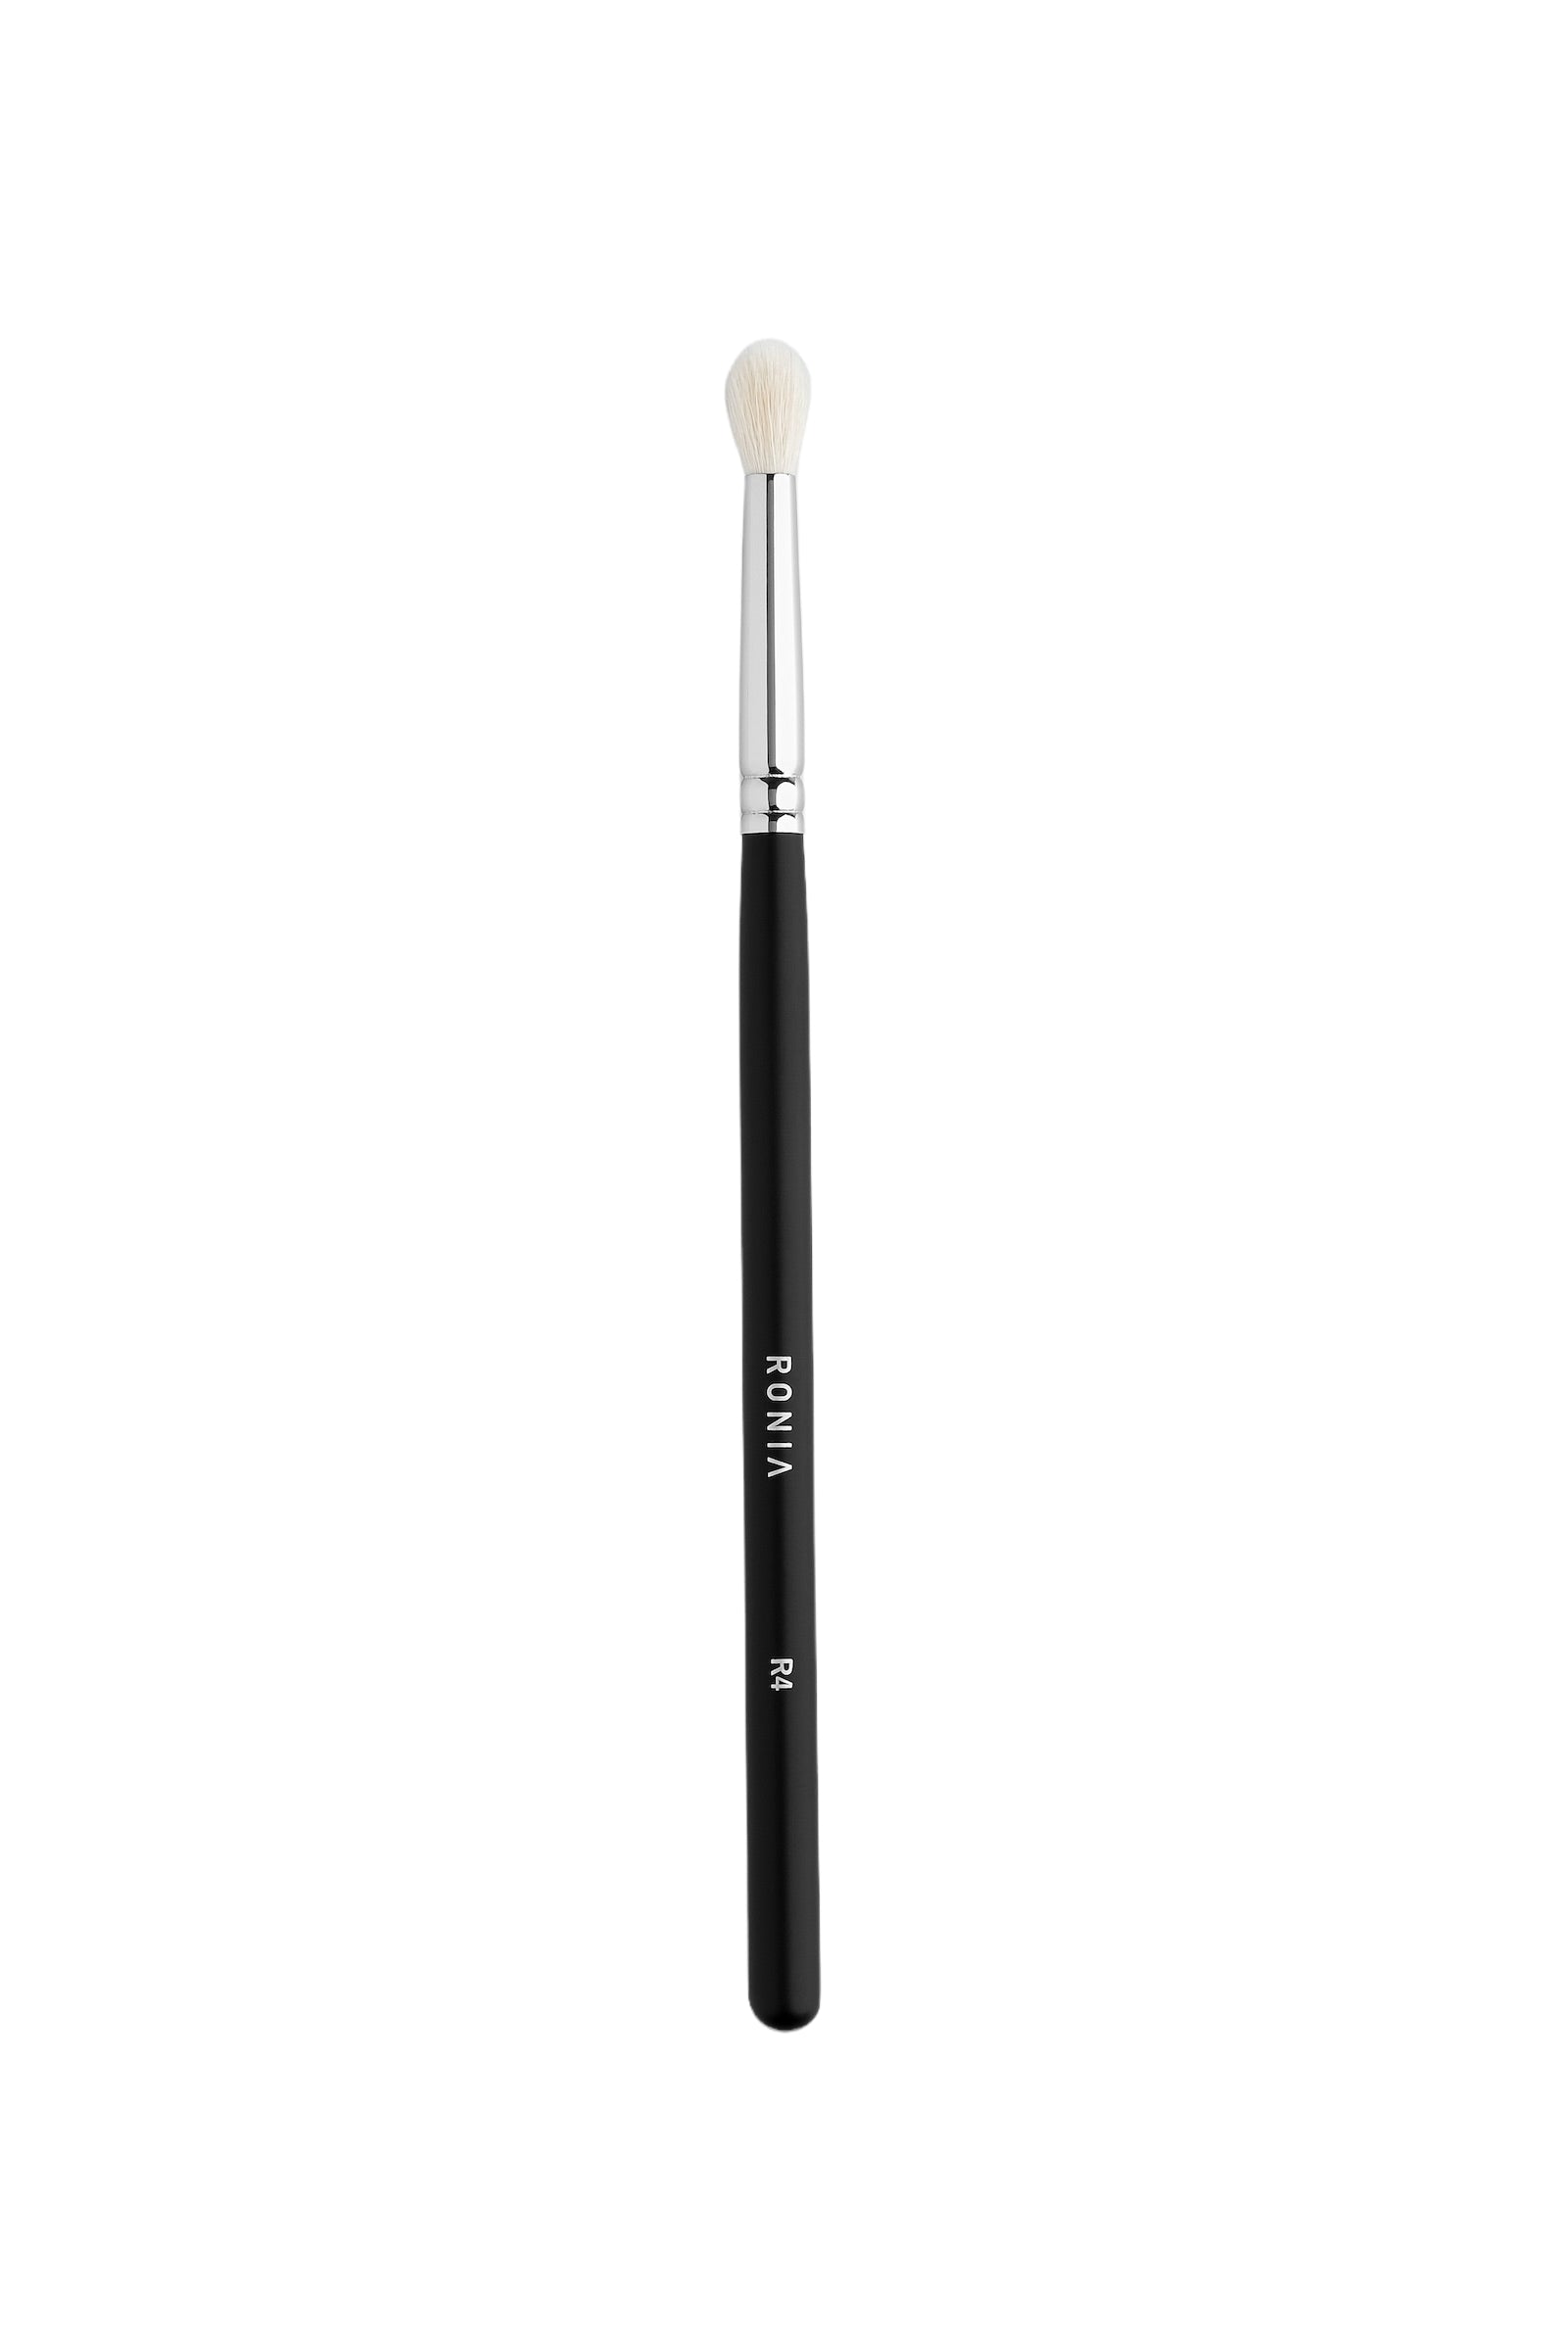 R4- Small eyeshadow blending brush